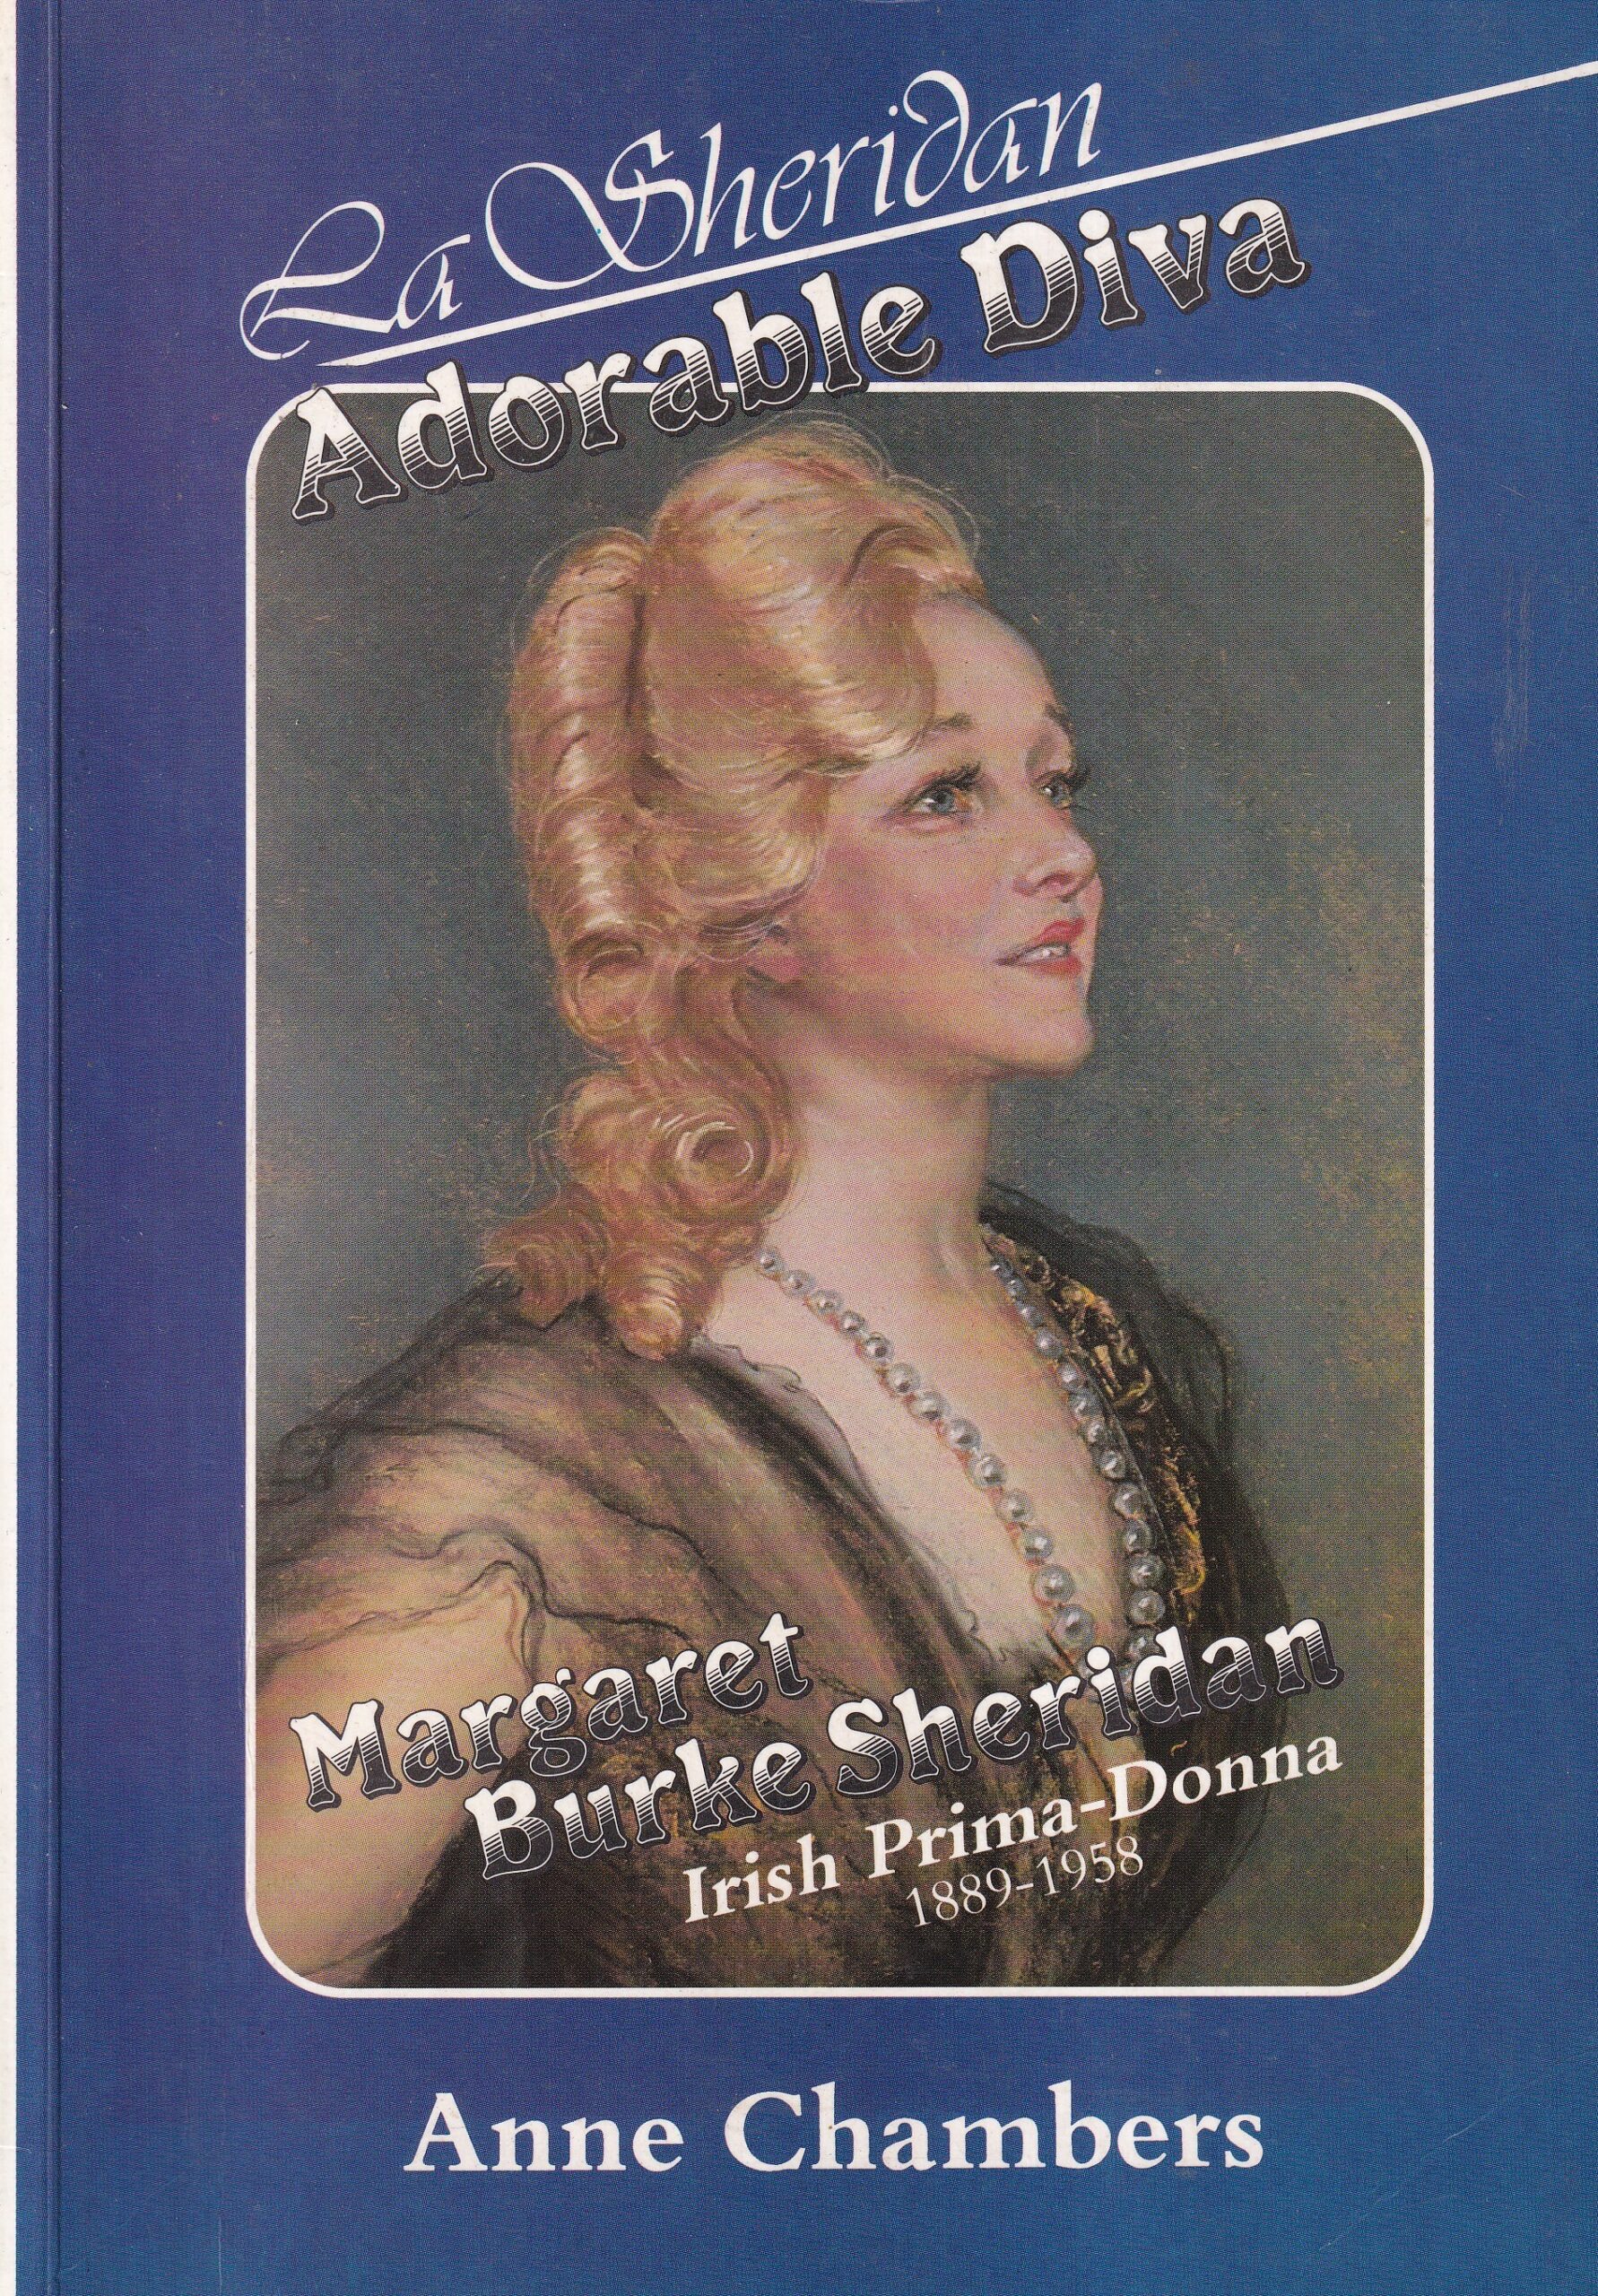 La Sheridan Adorable Diva: Margaret Burke Sheridan Irish Prima-Donna 1889-1958- Signed by Anne Chambers